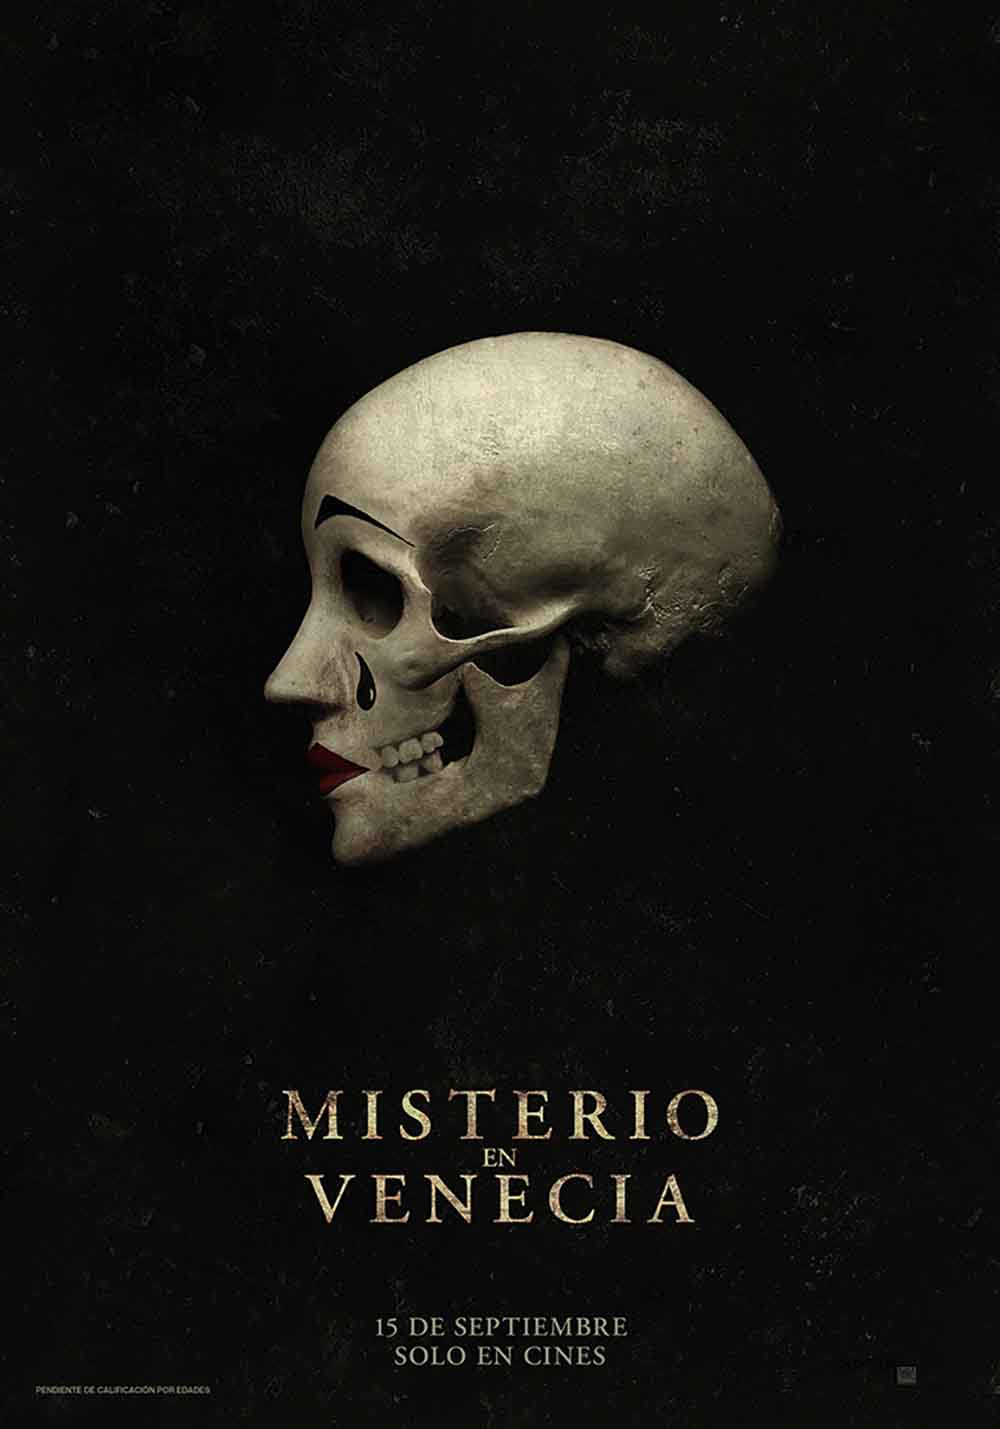 Misterio en Venecia, un thriller sobrenatural de Kenneth Branagh